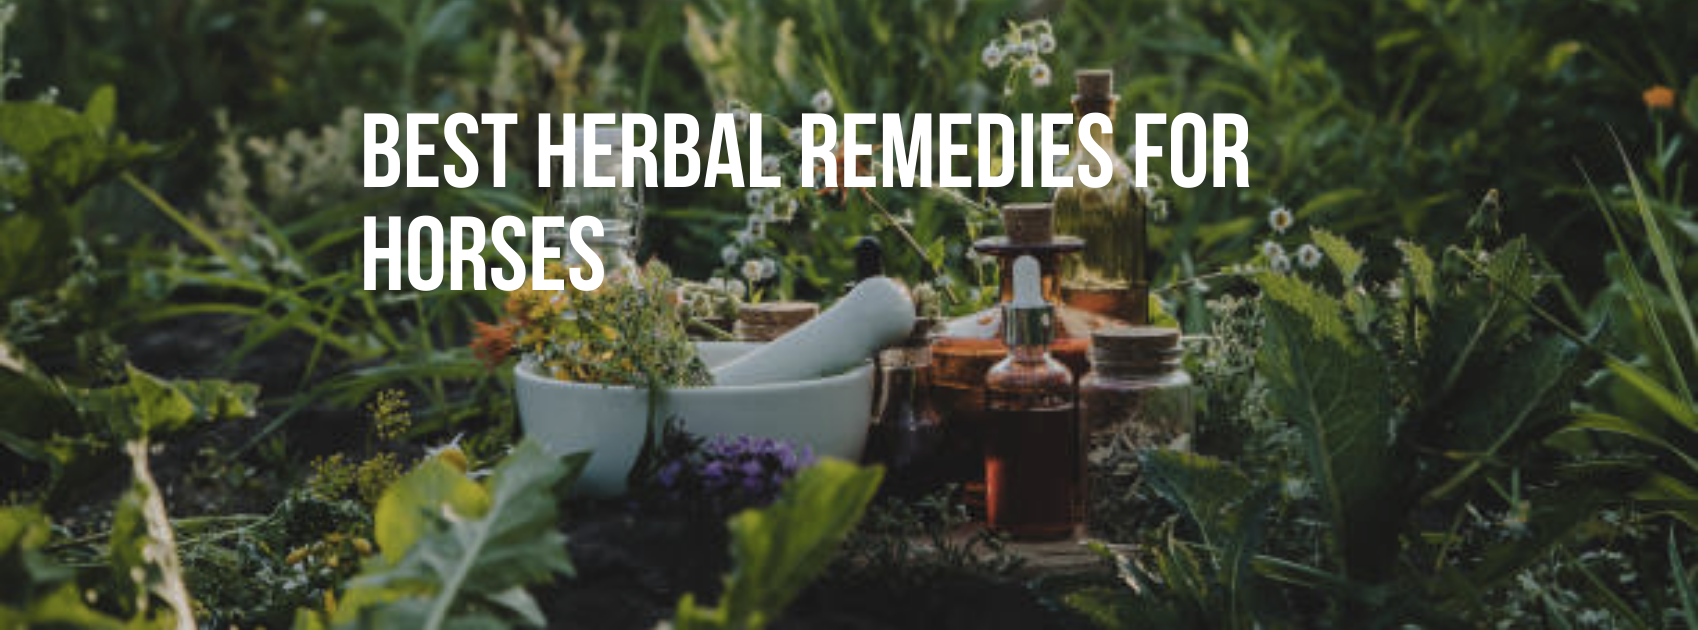 Best Herbal Remedies for Horses